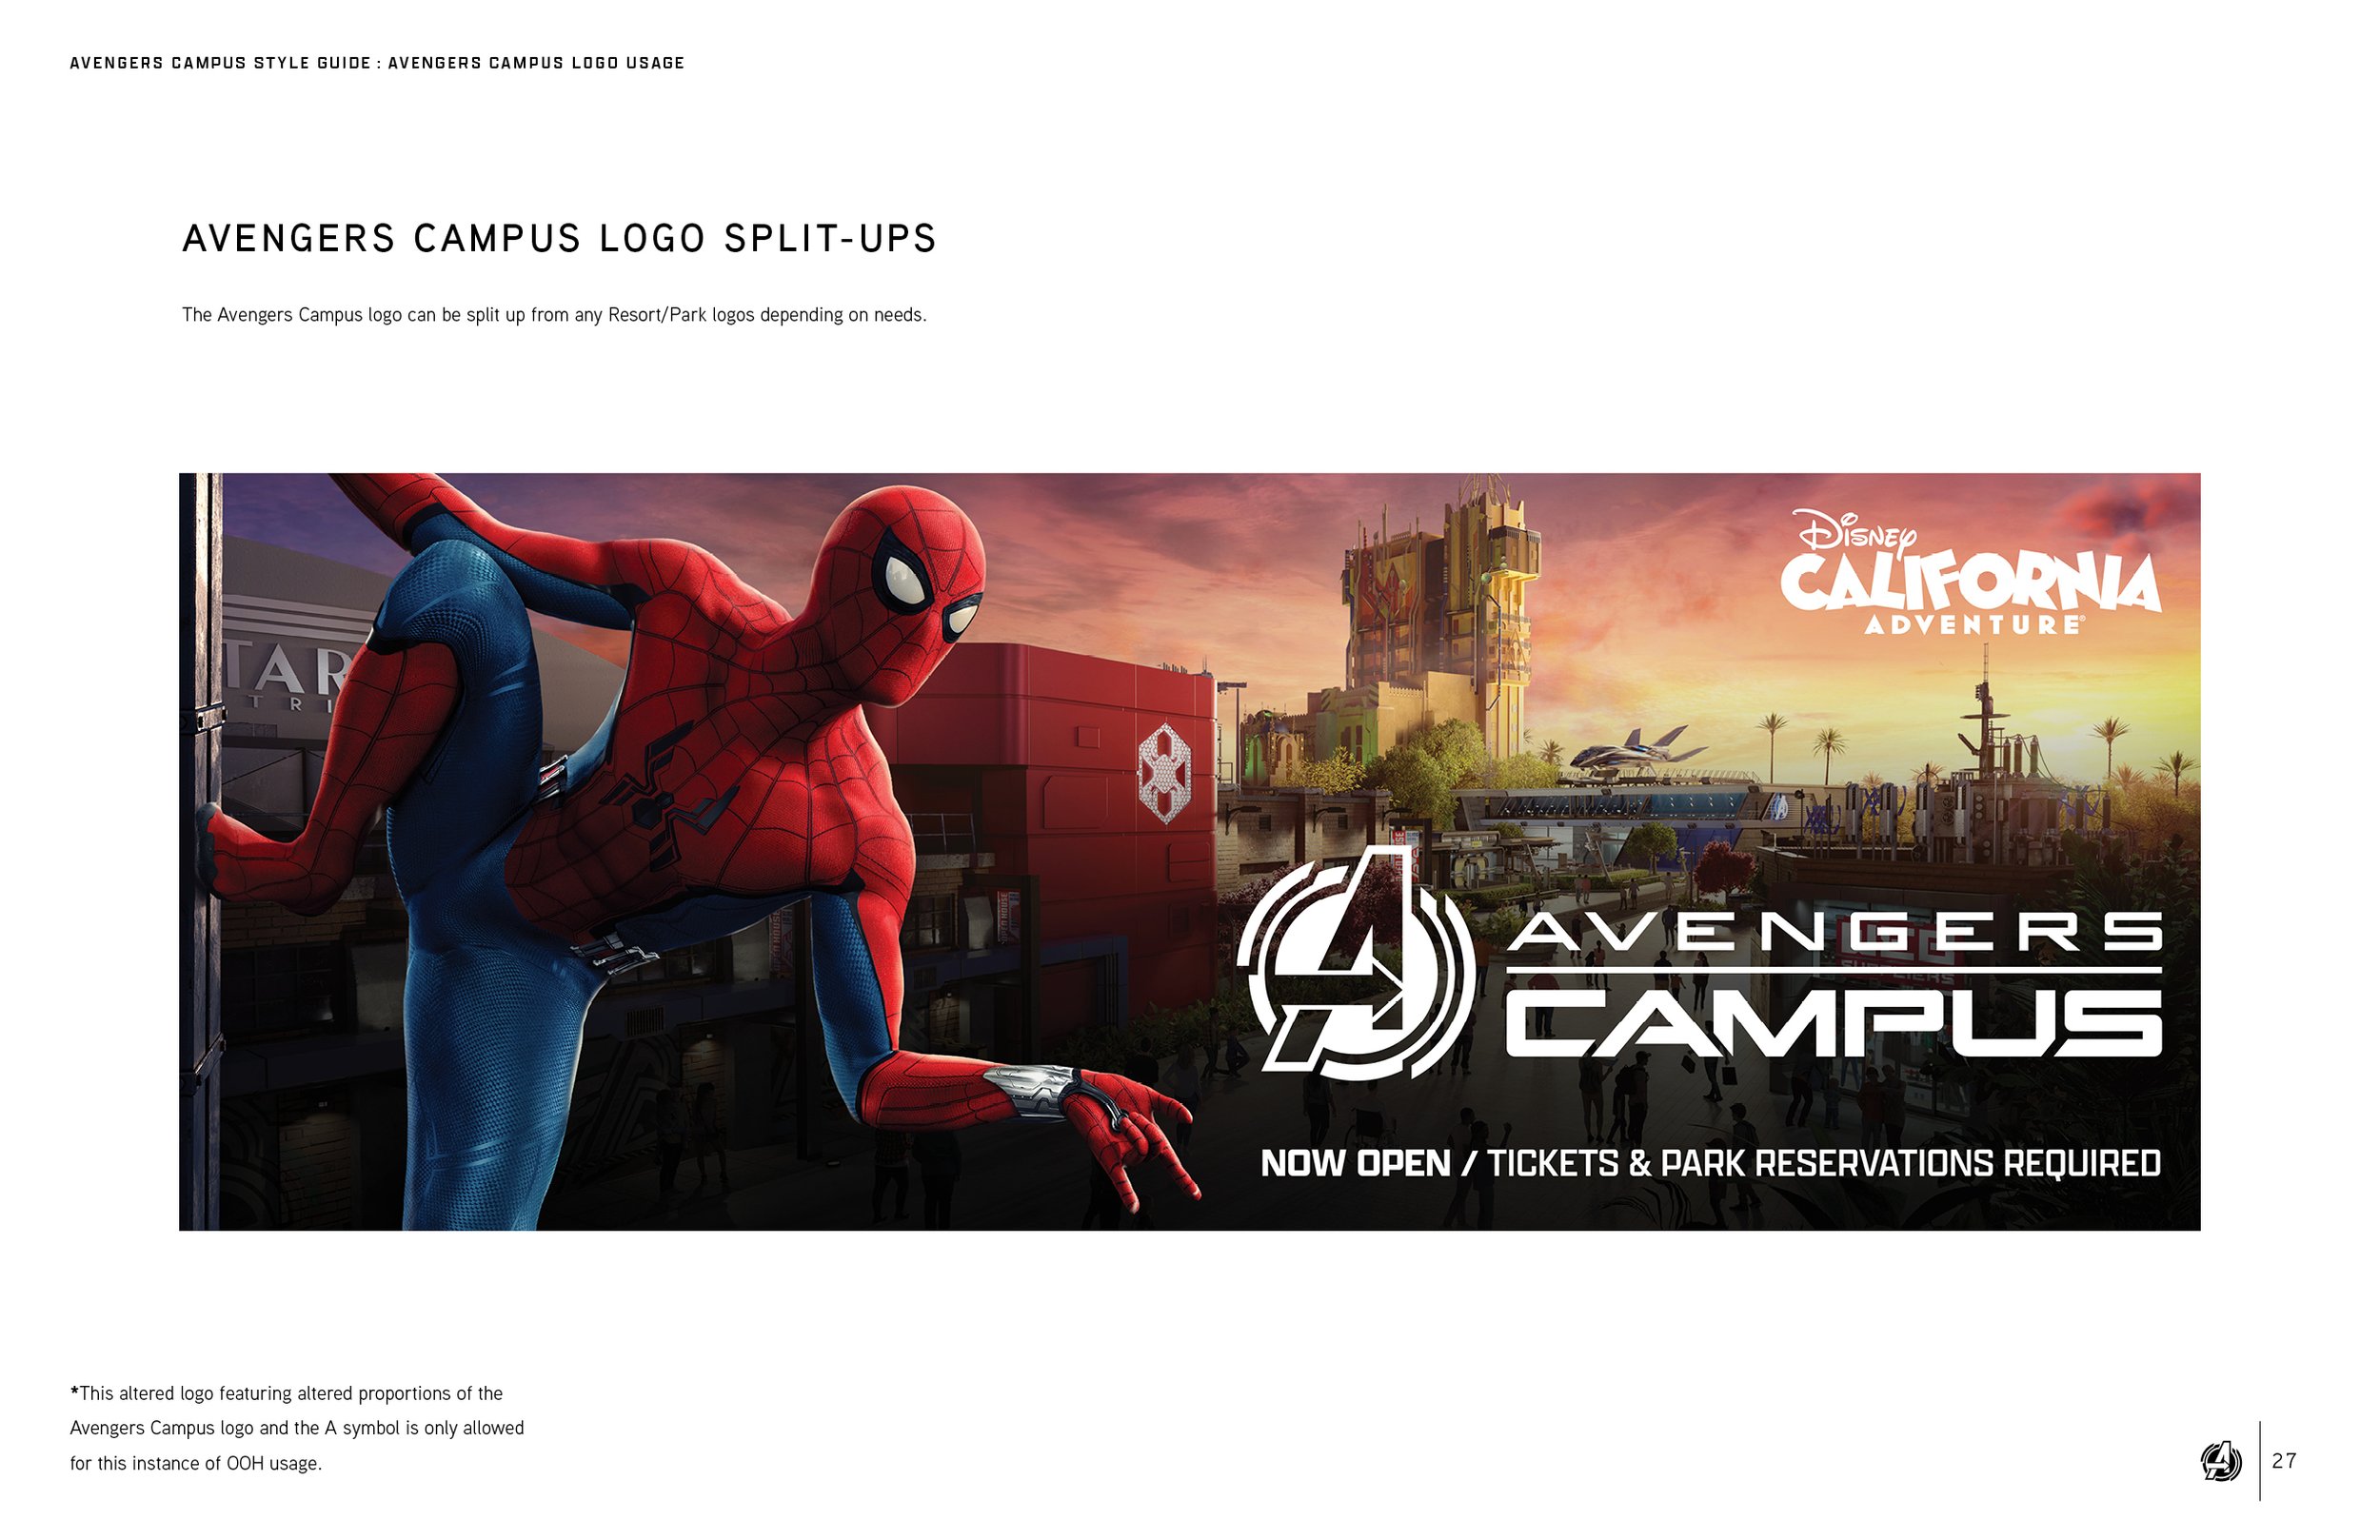 AvengersCampus_StyleGuide_Website_27.jpg